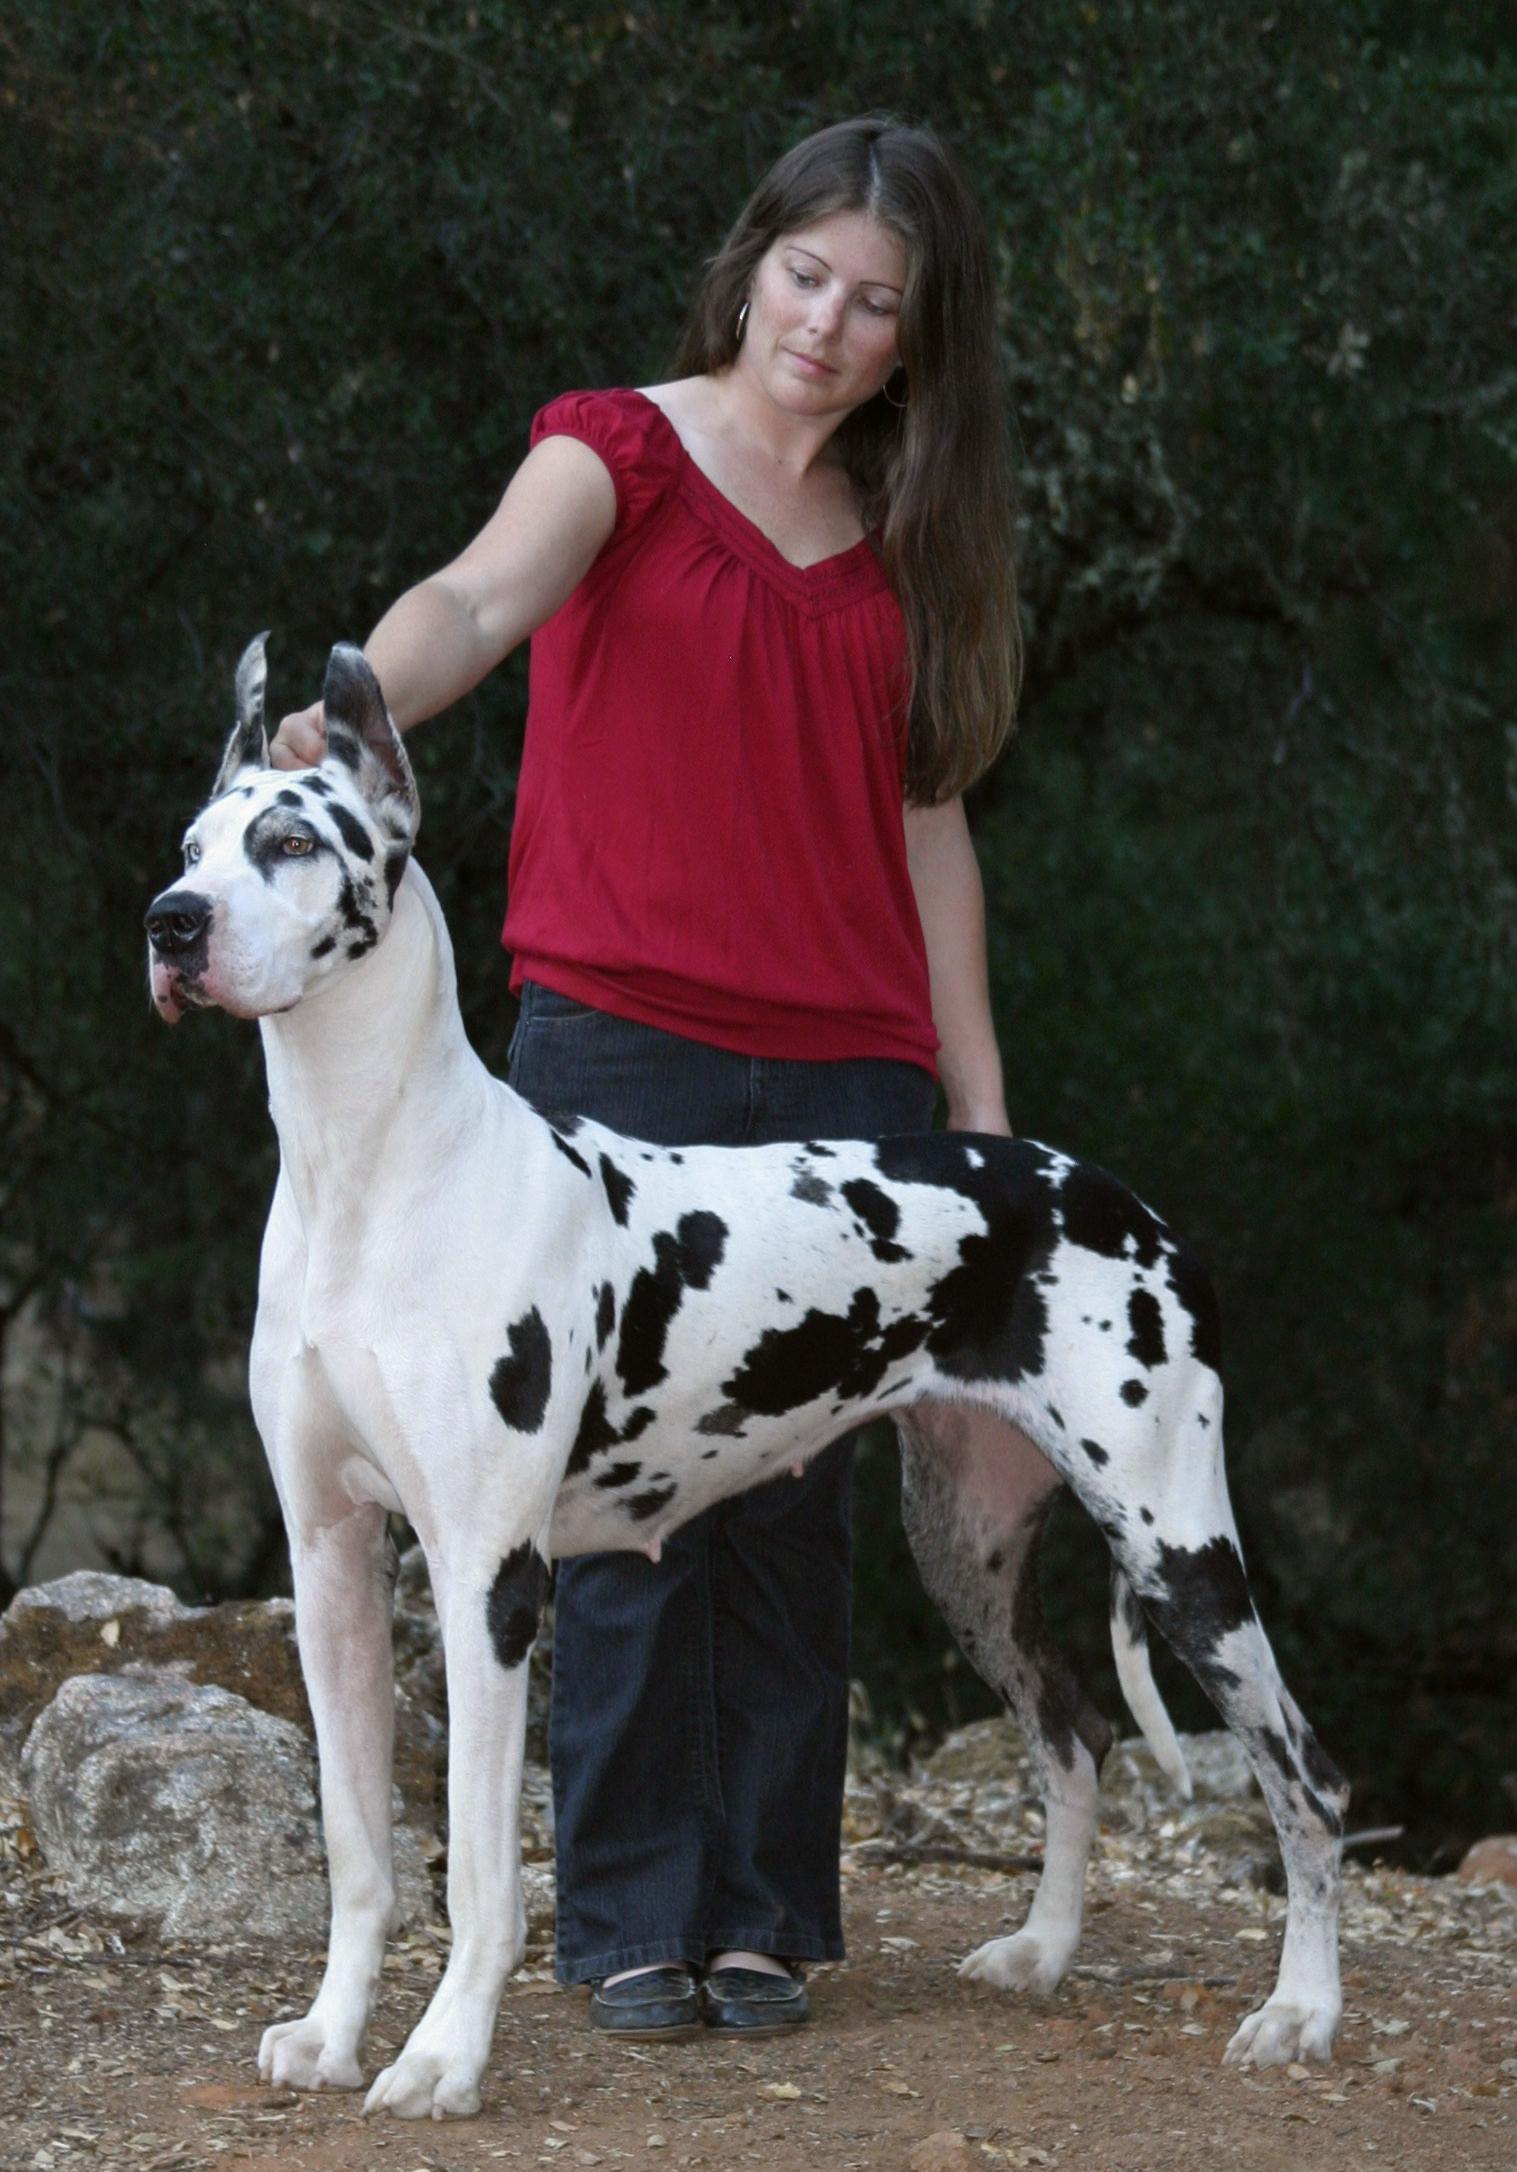 Black And White Brindle Great Dane Dog